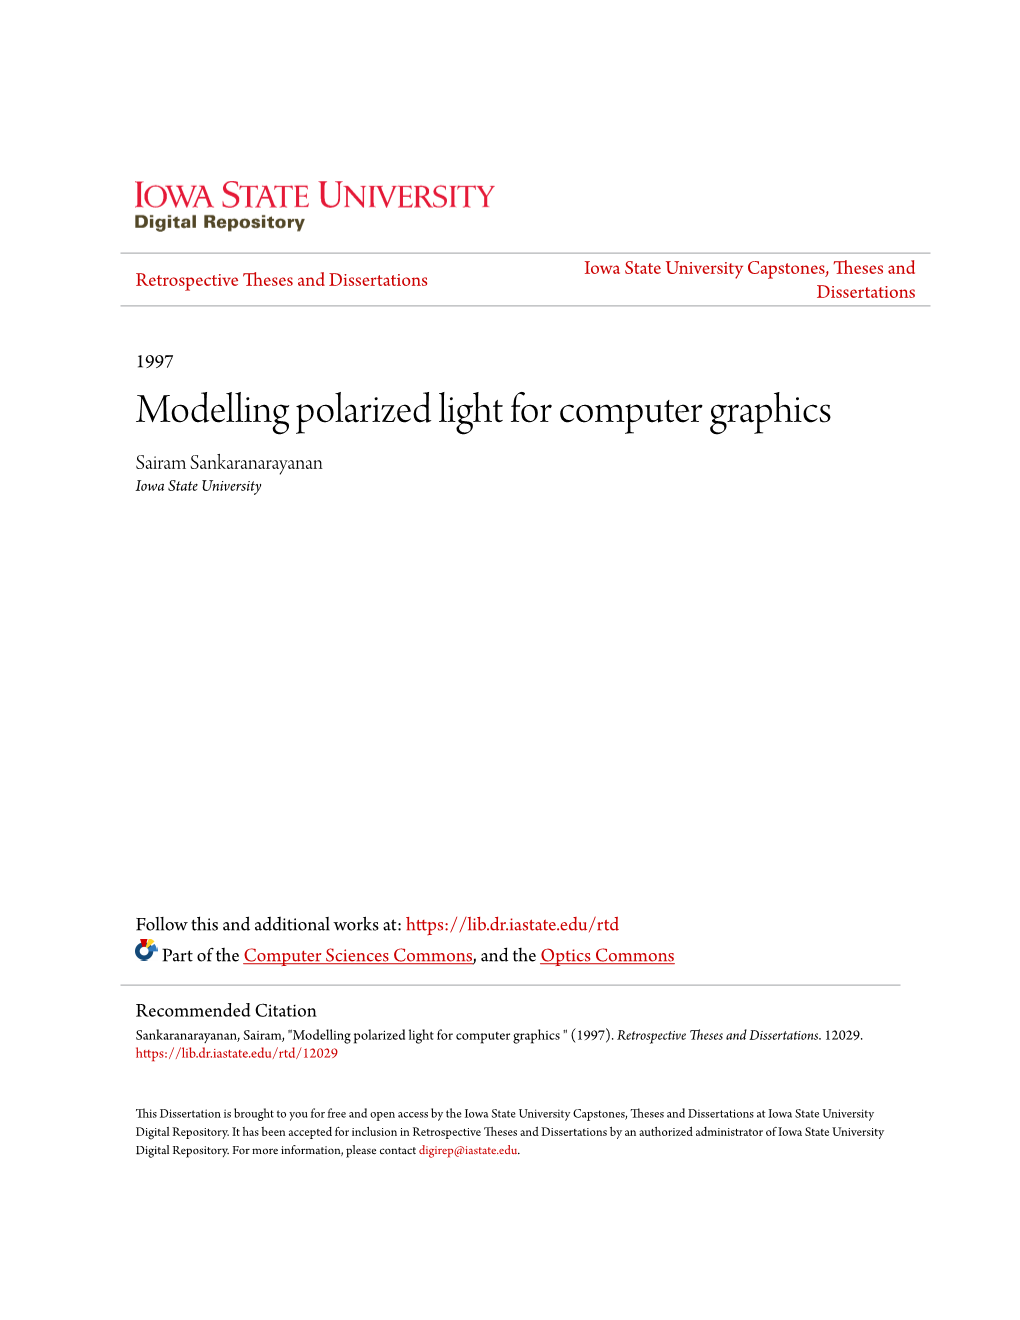 Modelling Polarized Light for Computer Graphics Sairam Sankaranarayanan Iowa State University